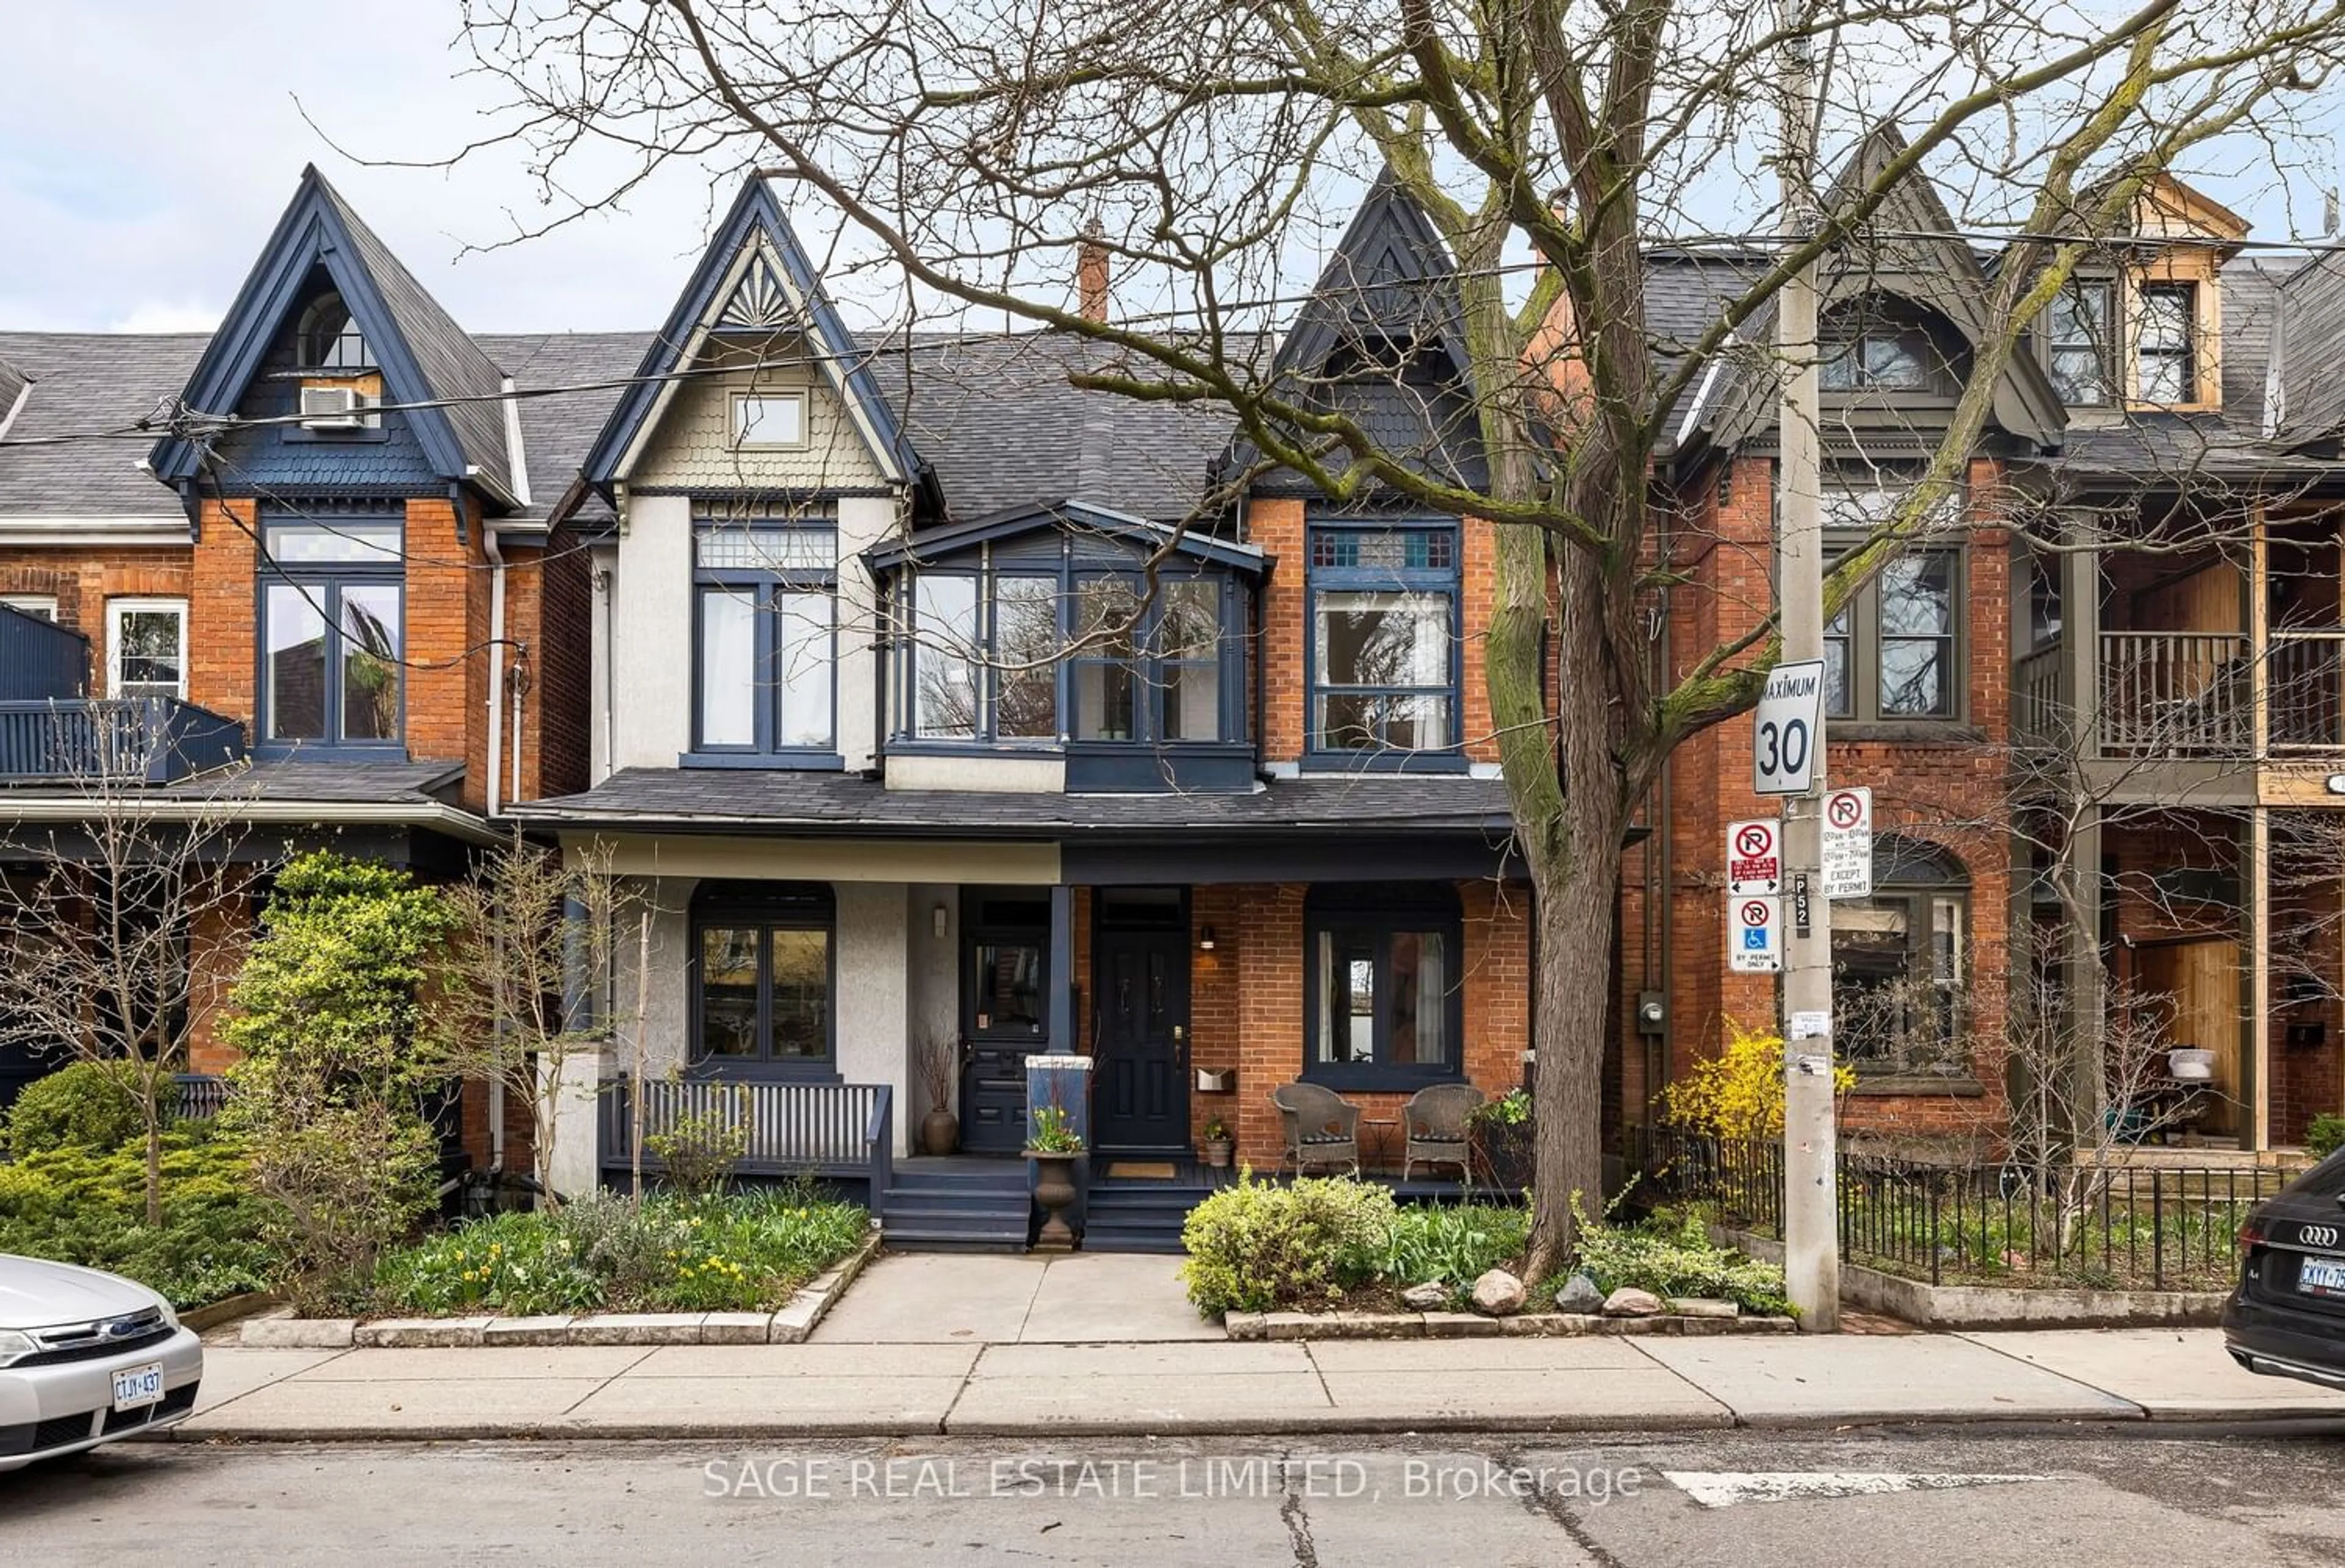 Home with brick exterior material for 156 Beaconsfield Ave, Toronto Ontario M6J 3J6